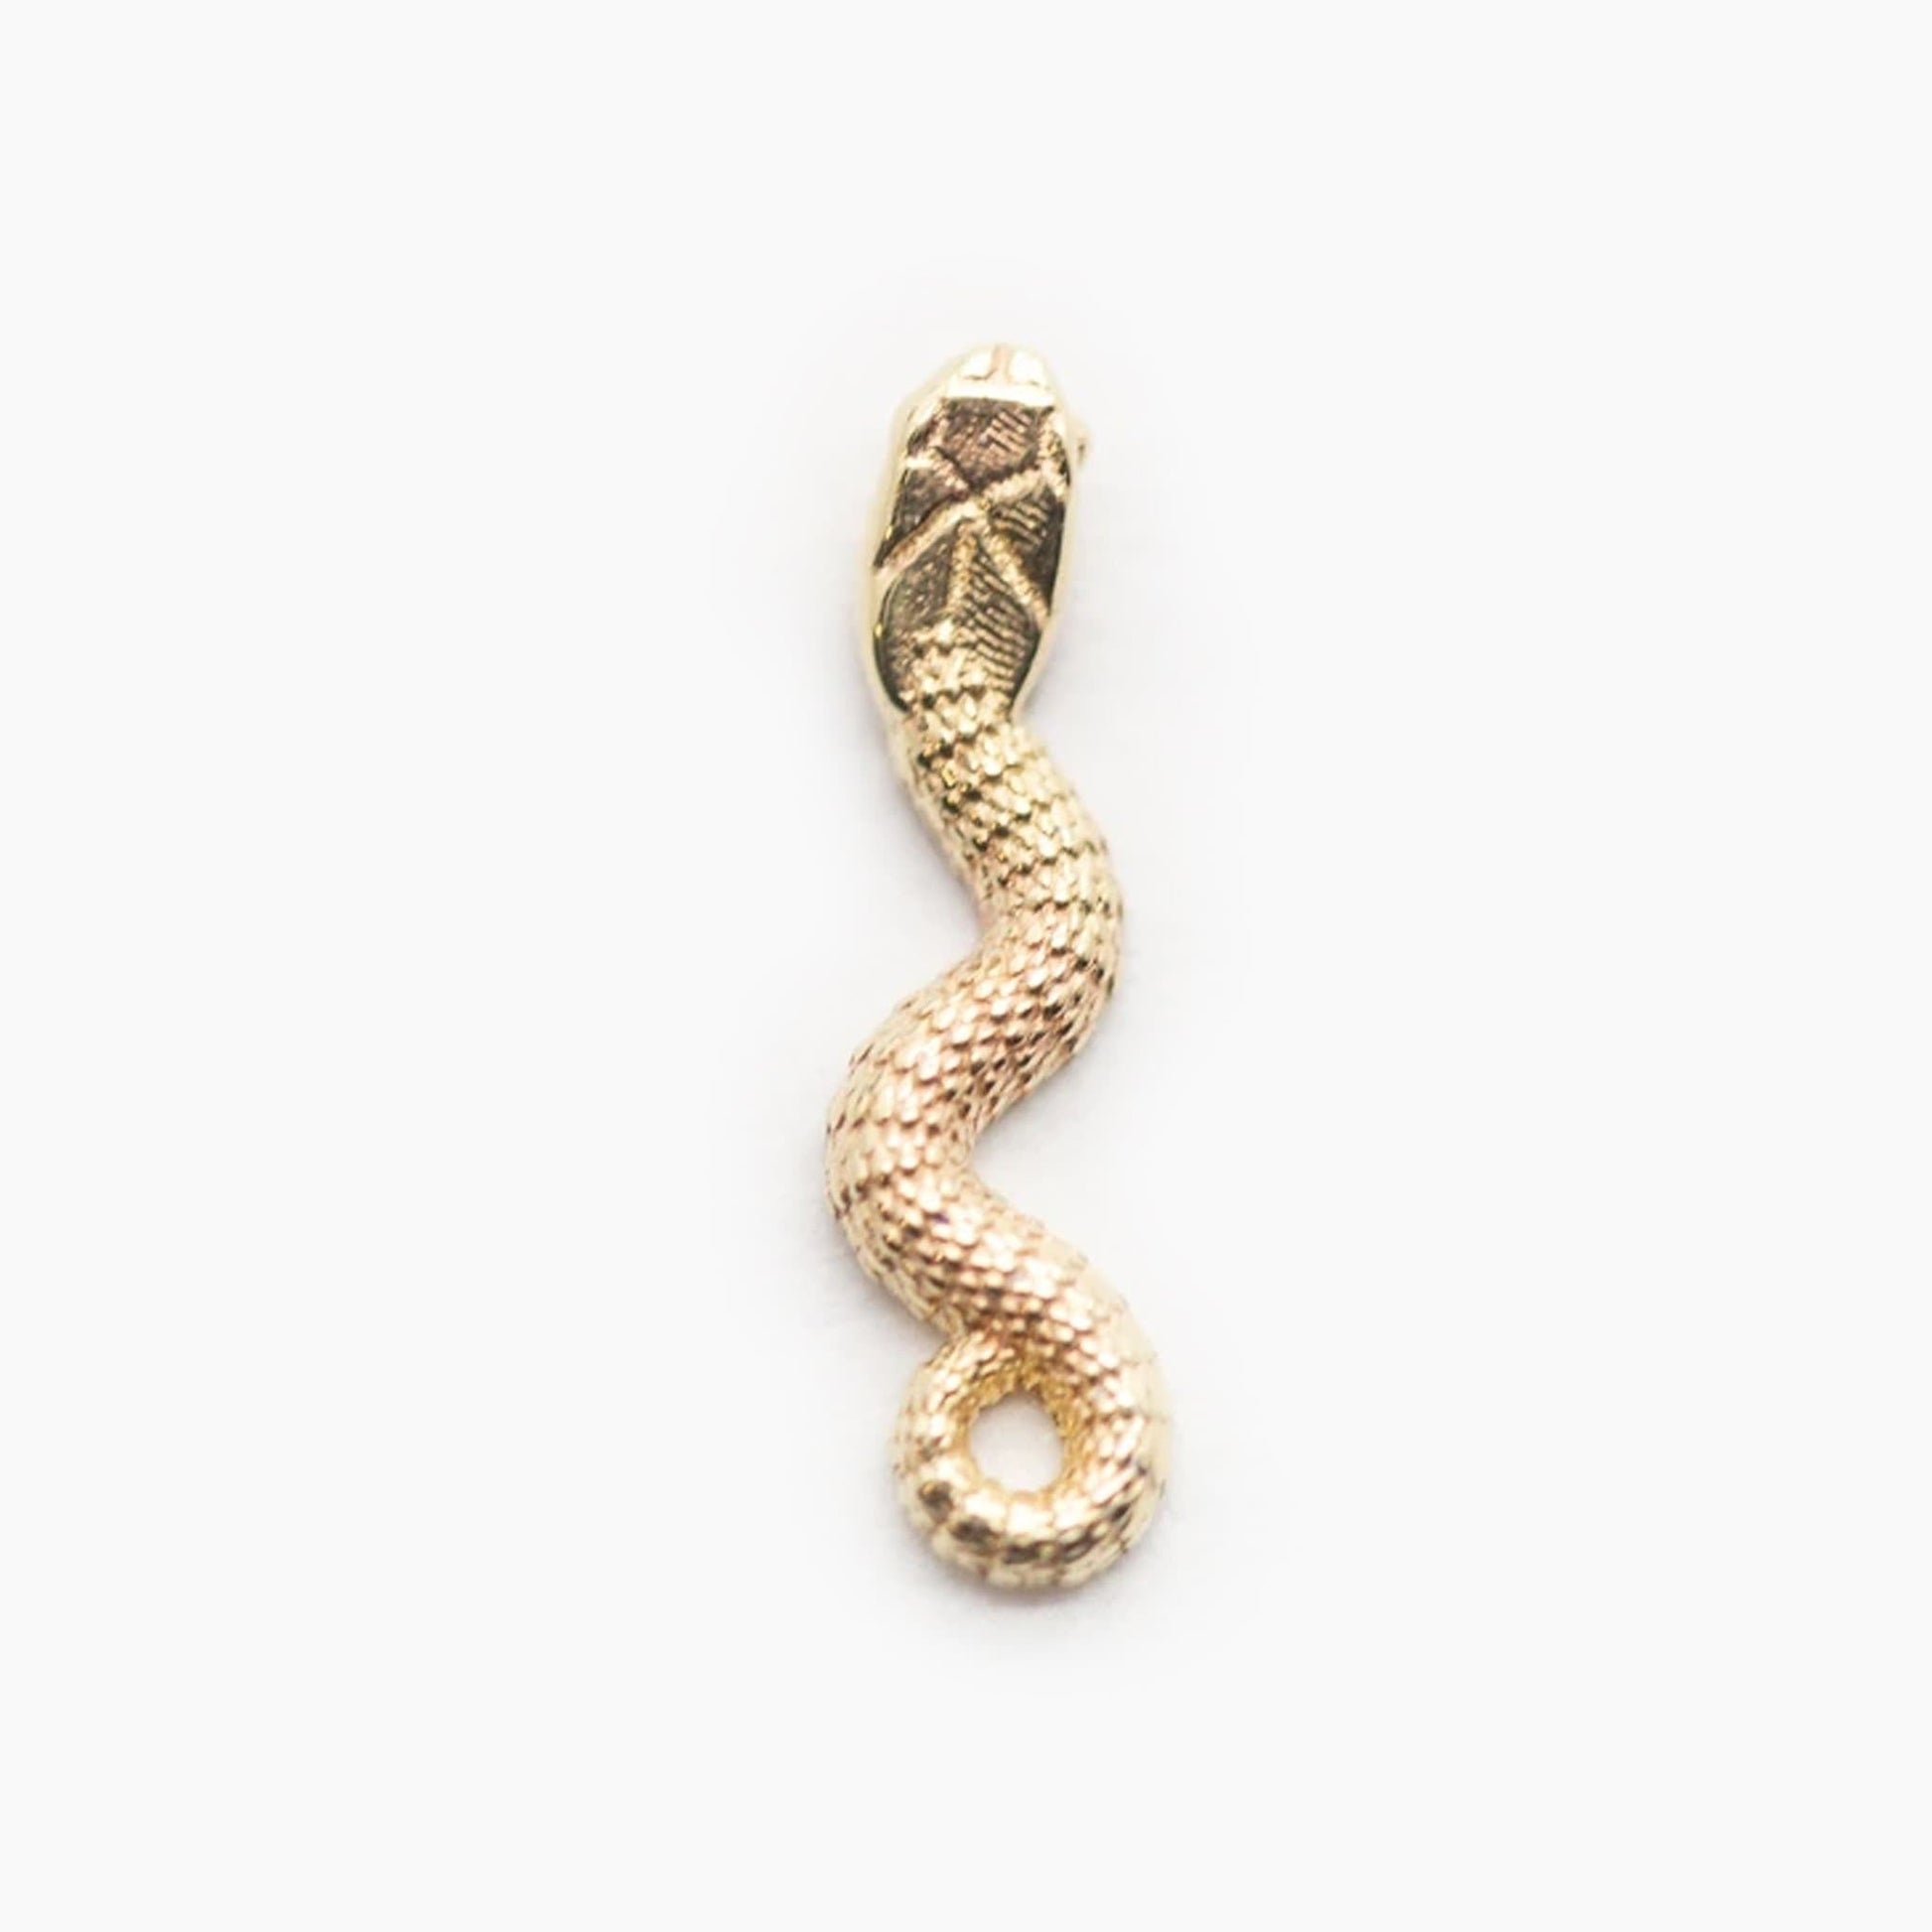 Threadless 14k Gold Snake Ends For Nose, Ears & Lip - Avanti Body Jewelry